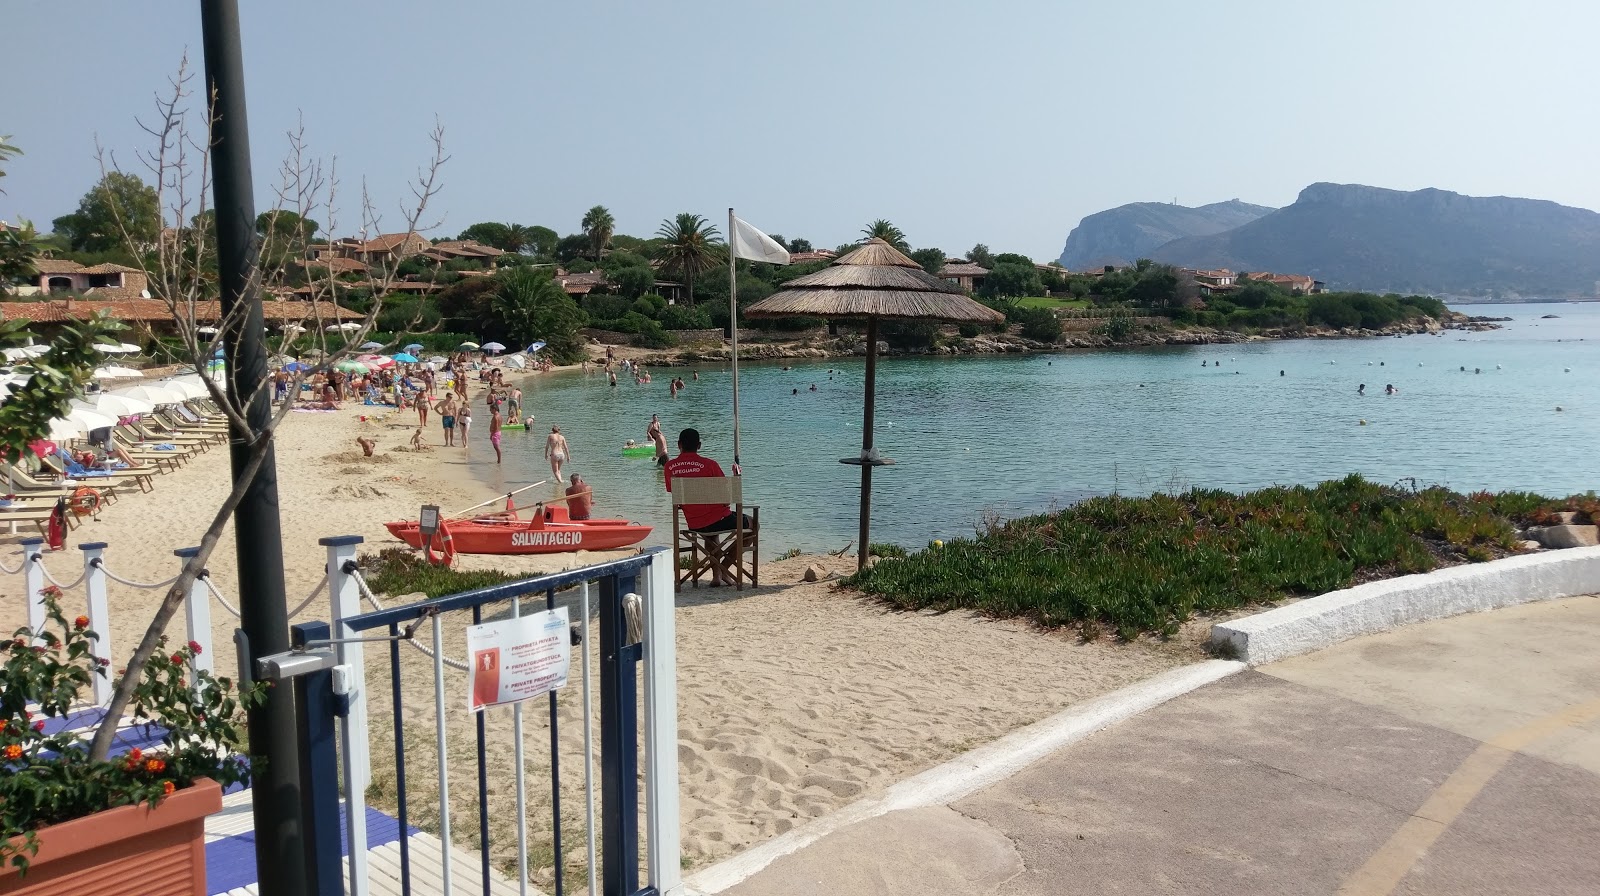 Photo of Spiaggia Baia Caddinas and the settlement